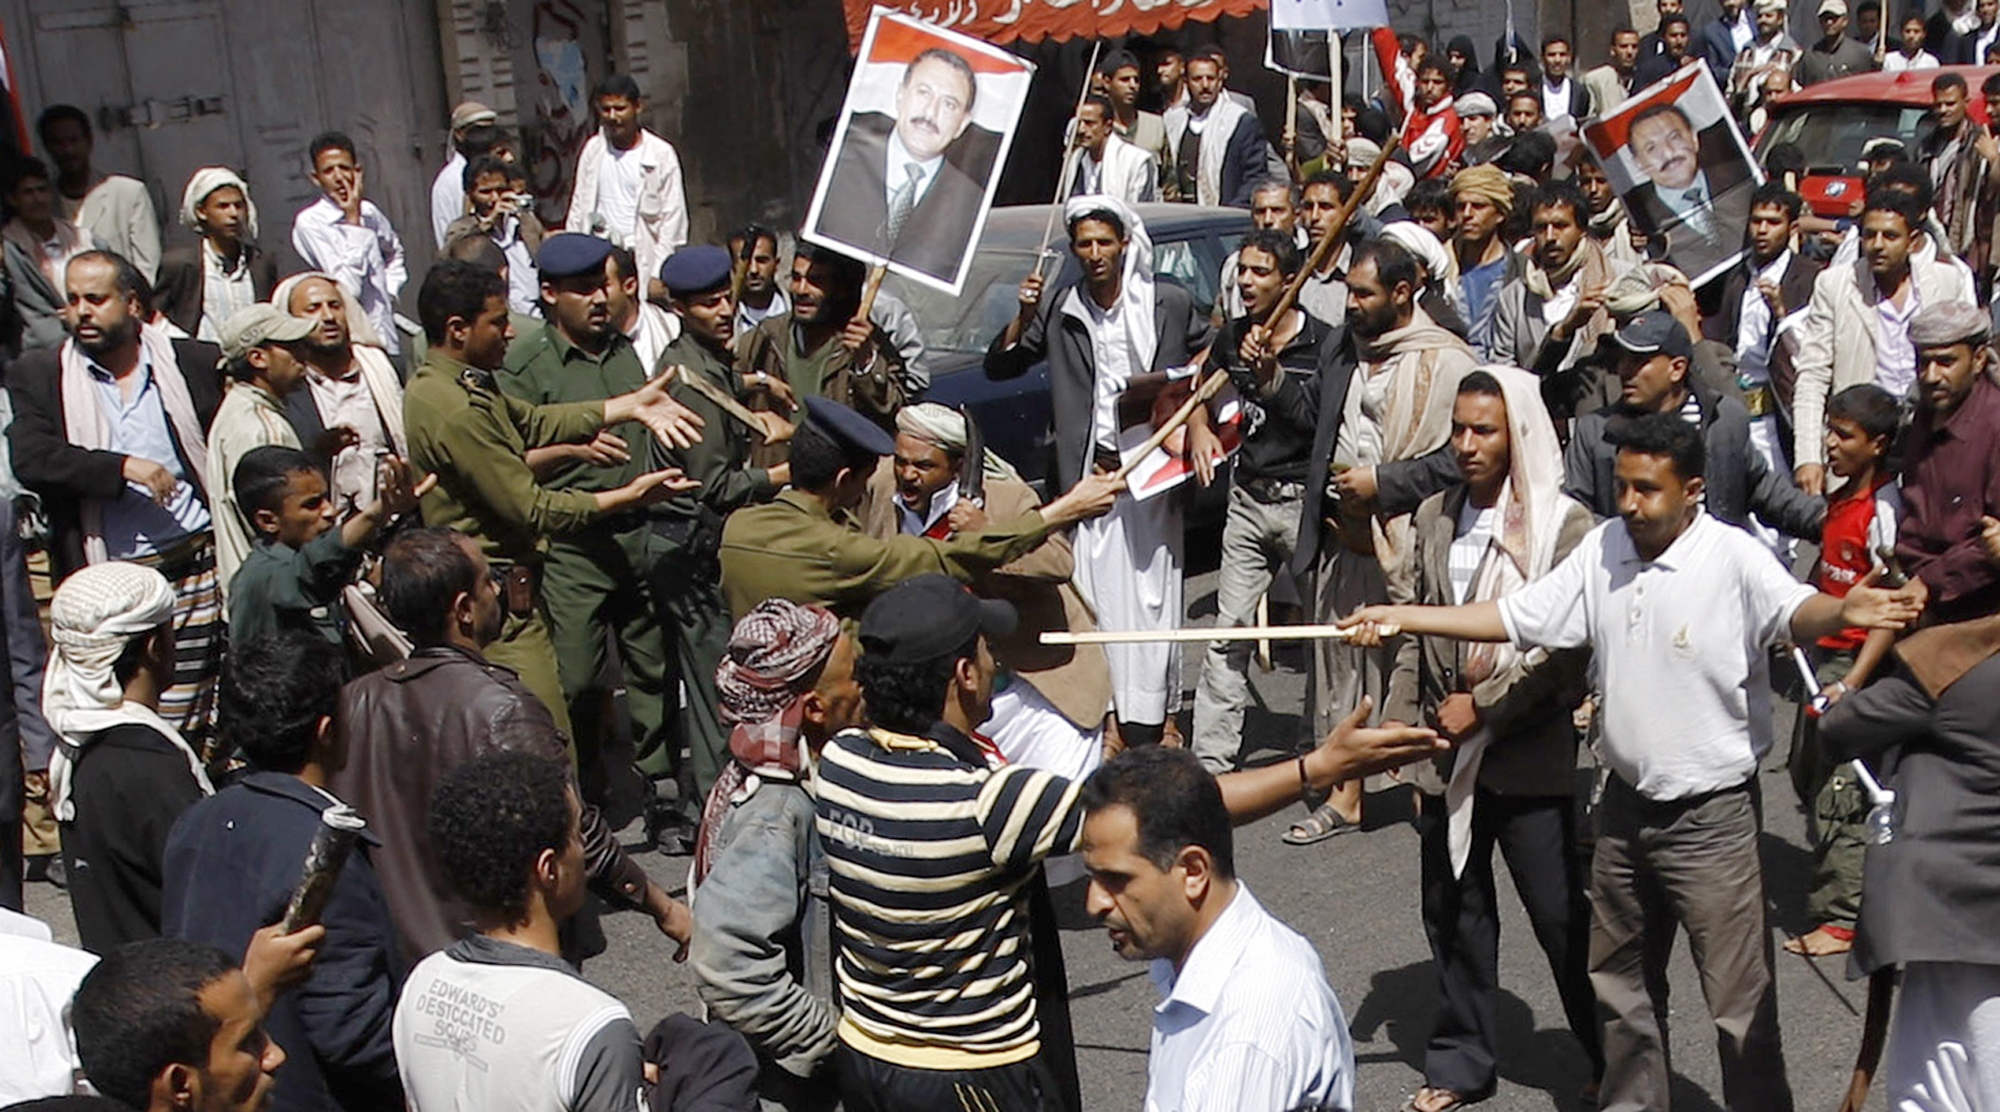 Jemen, Tunisien, Mellanöstern, Uppror, Demonstration